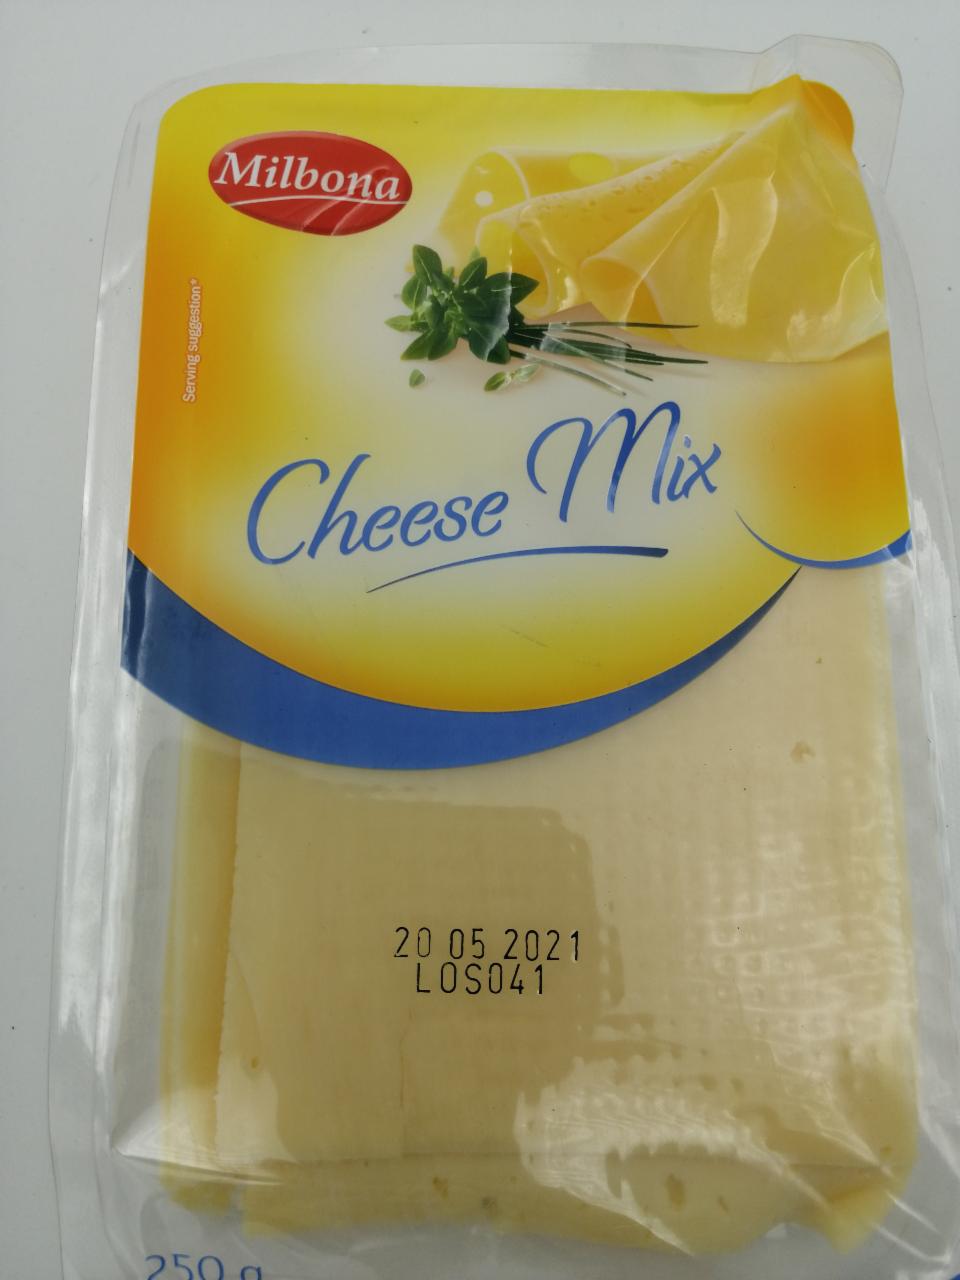 Fotografie - Cheese mix Milbona